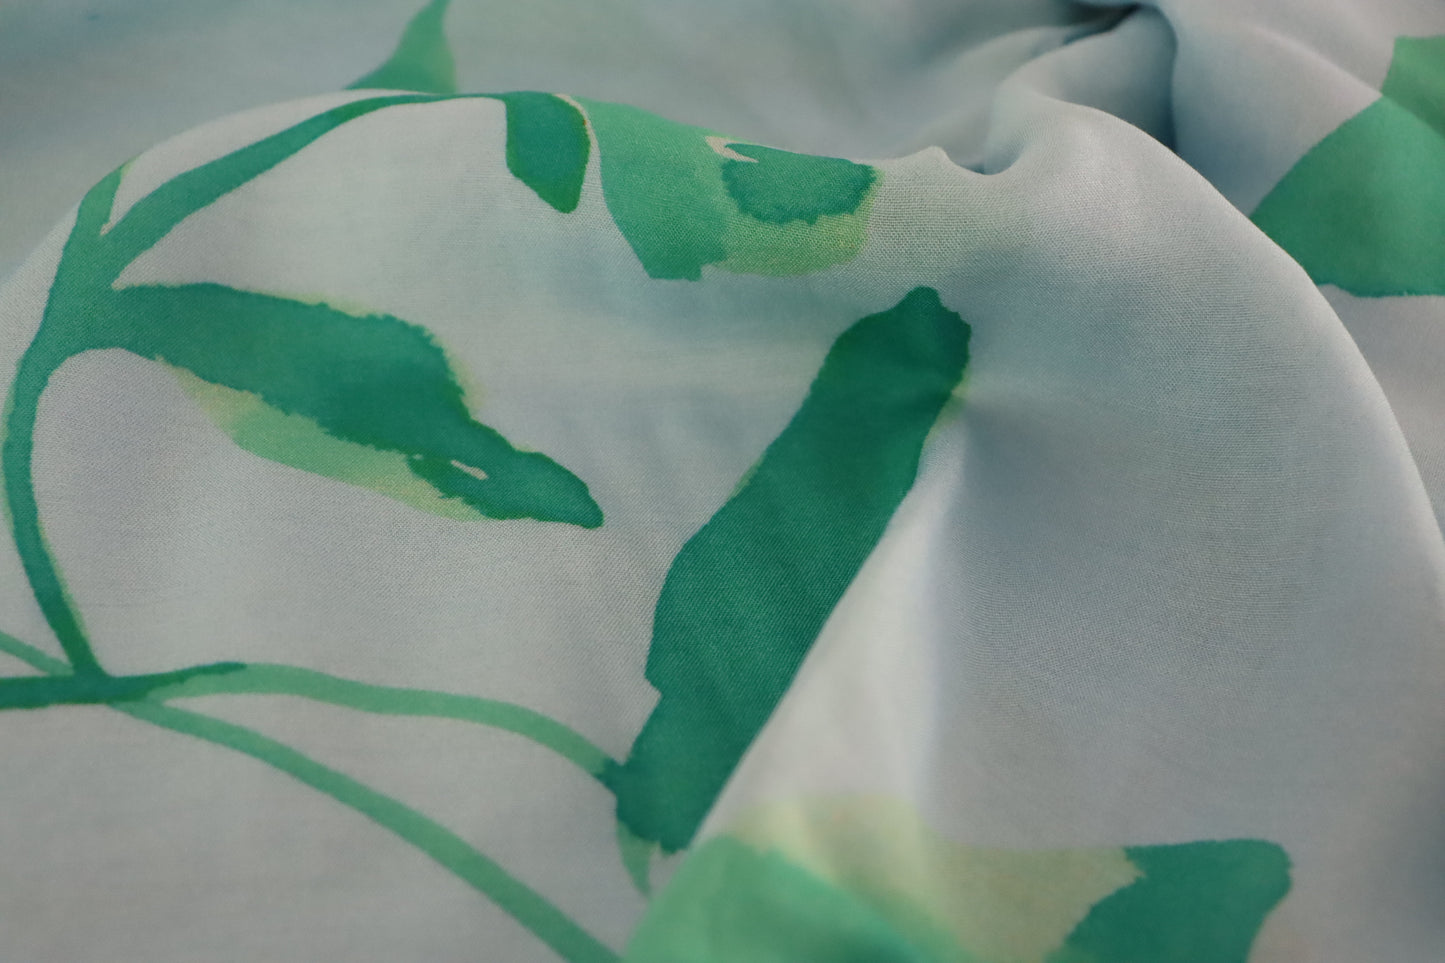 Tissu viscose et soie | Imprimé vert fond bleu pastel